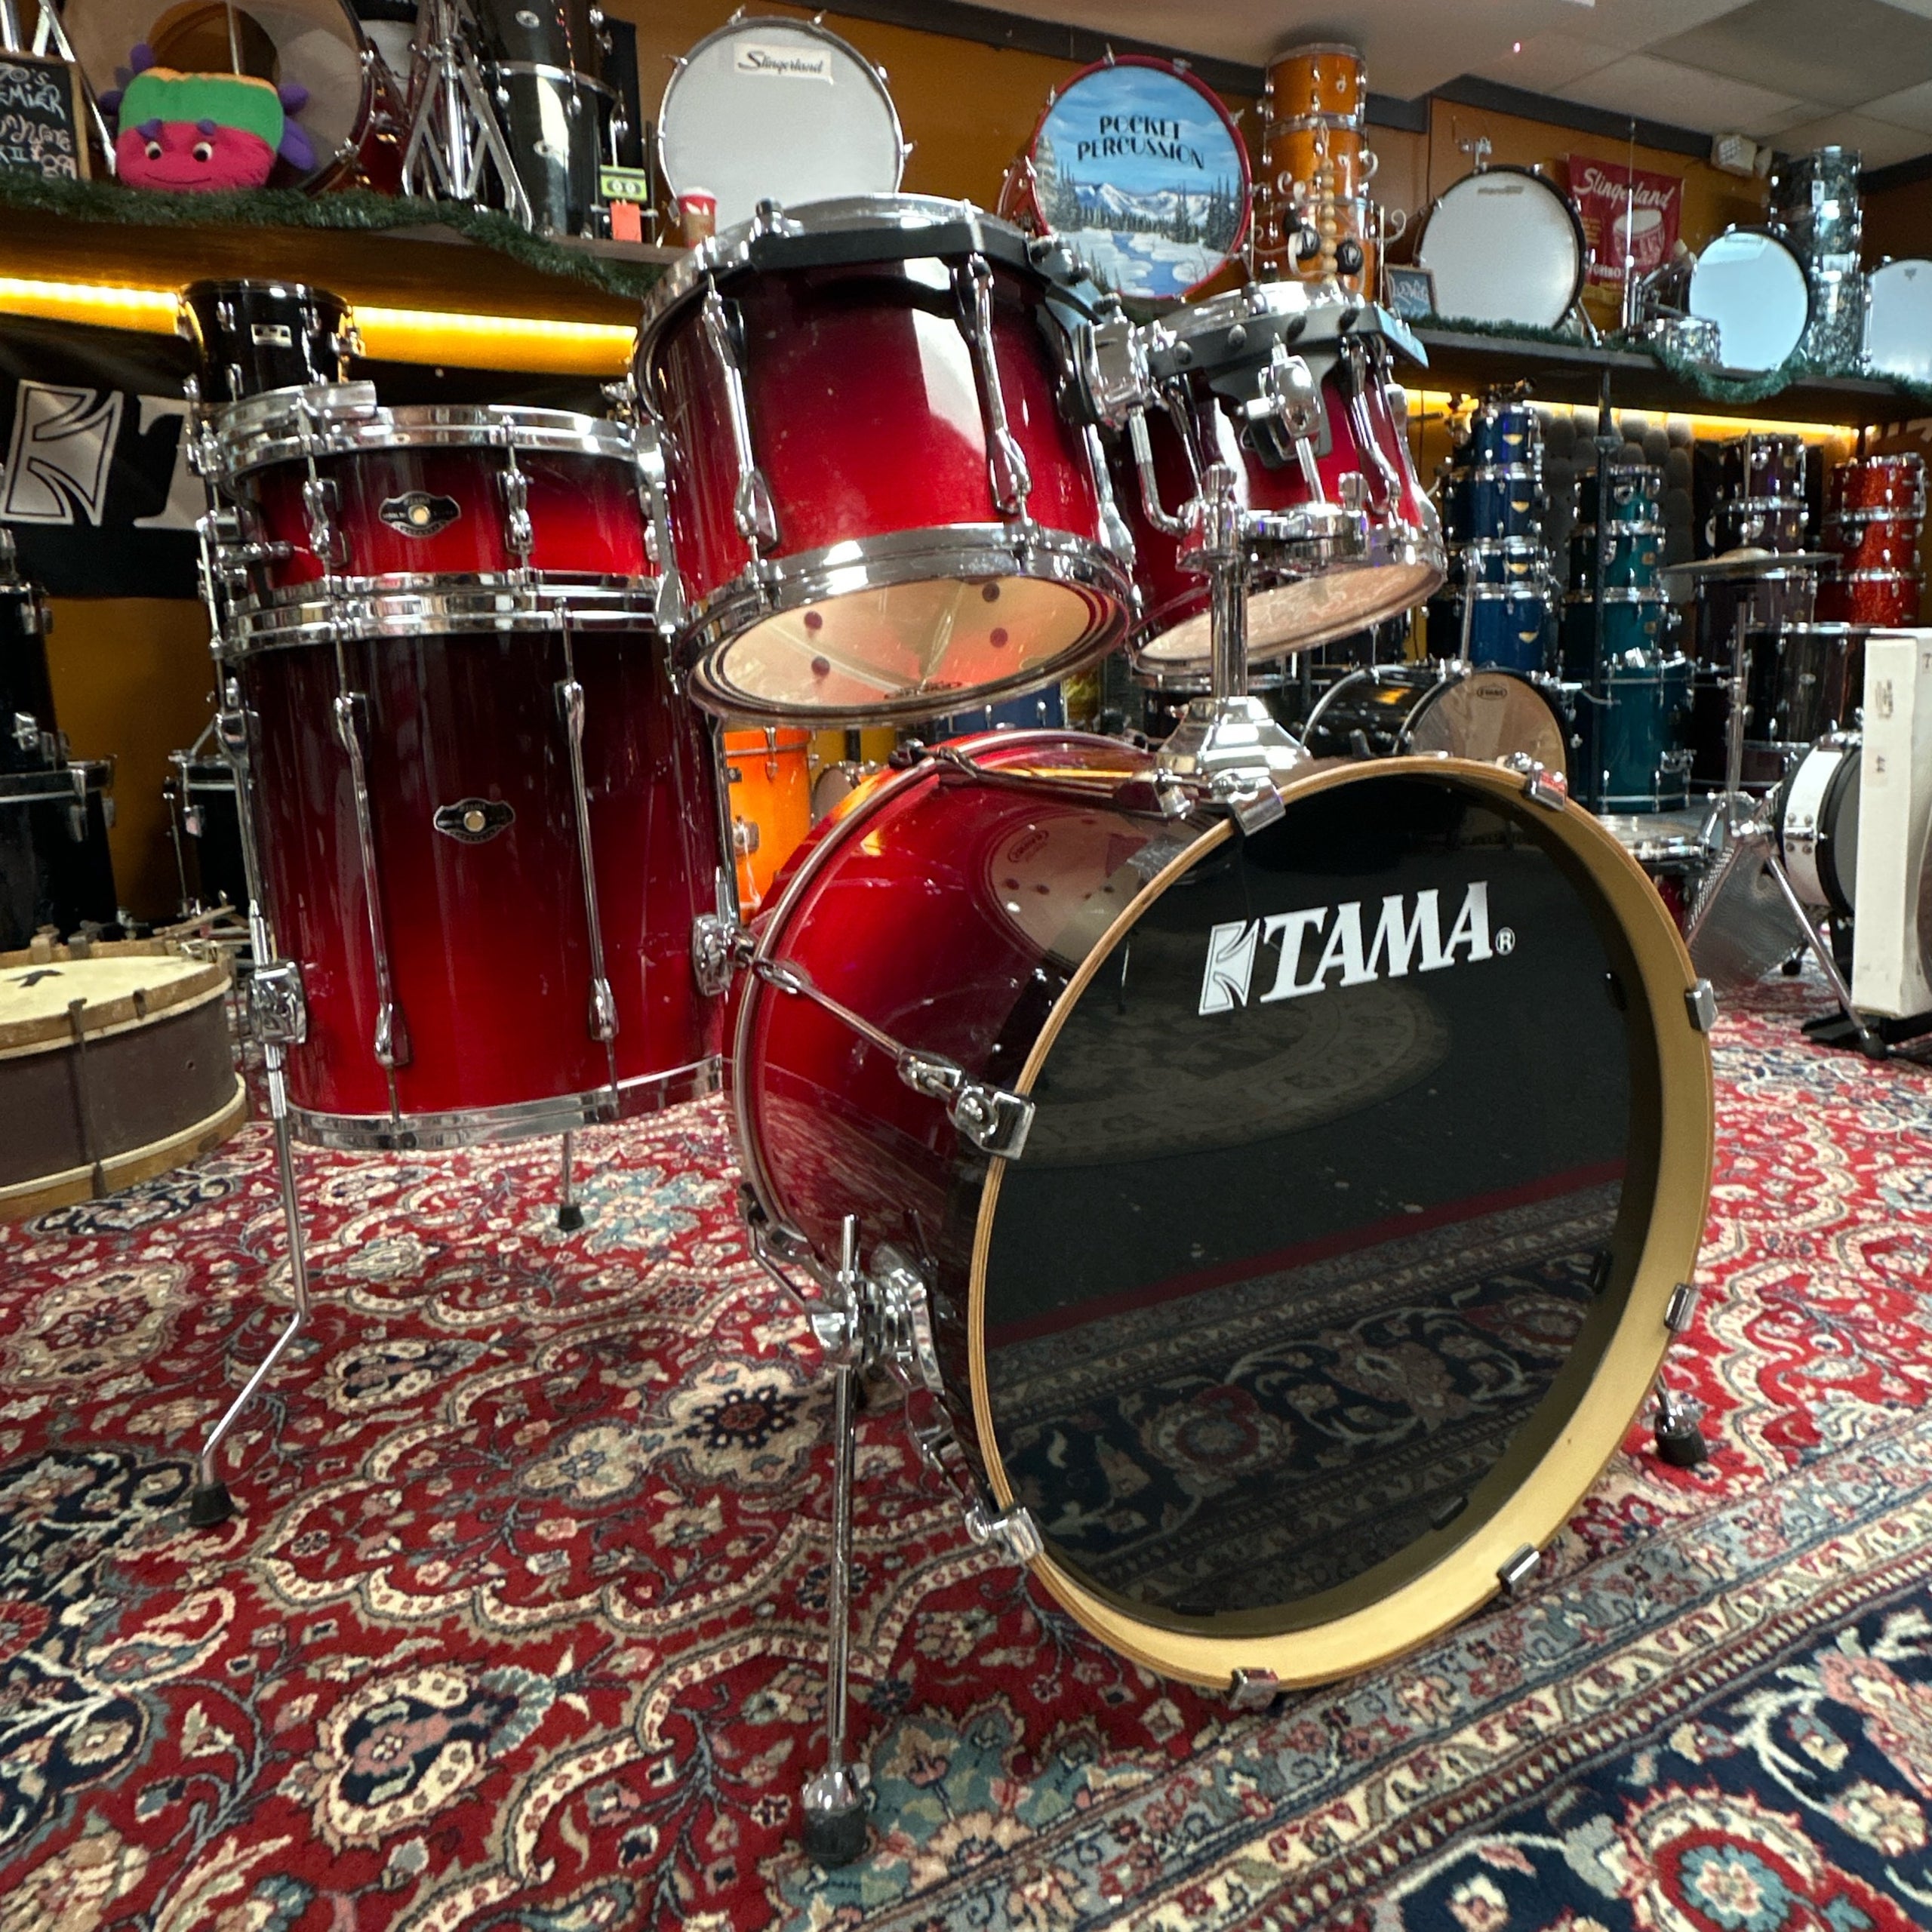 Pocket Percussion Drum shop